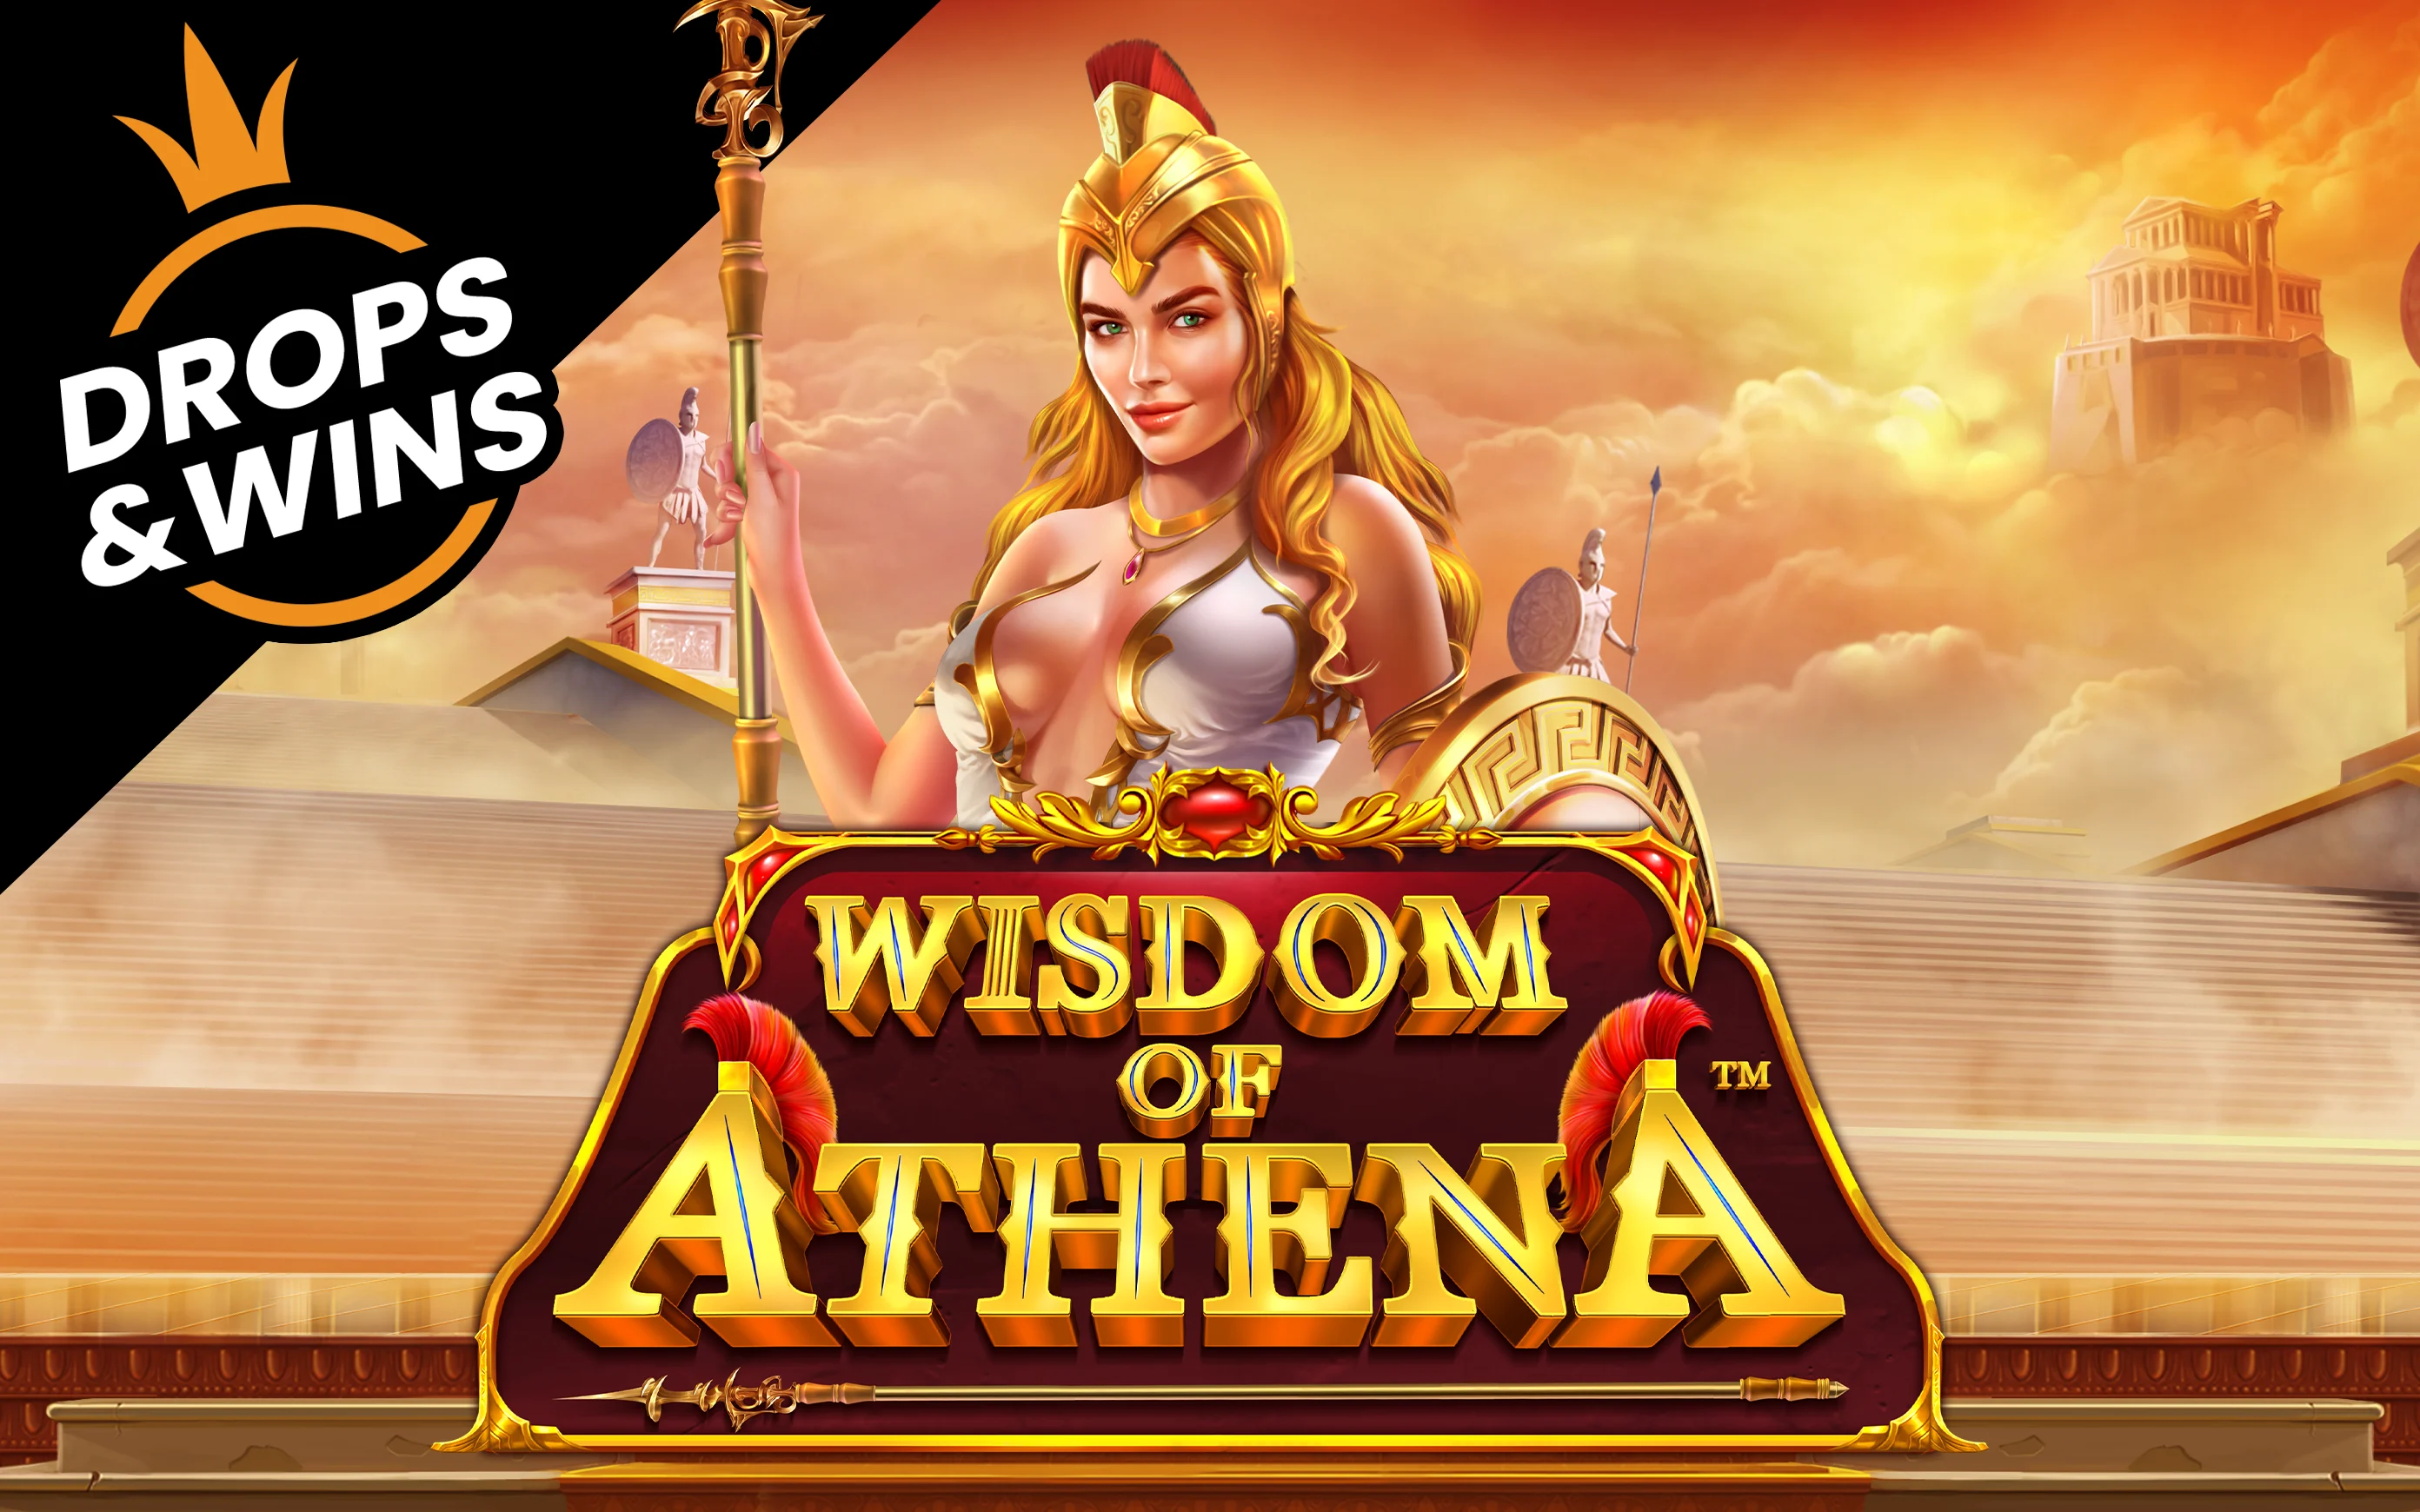 Gioca a Wisdom of Athena™ sul casino online Starcasino.be